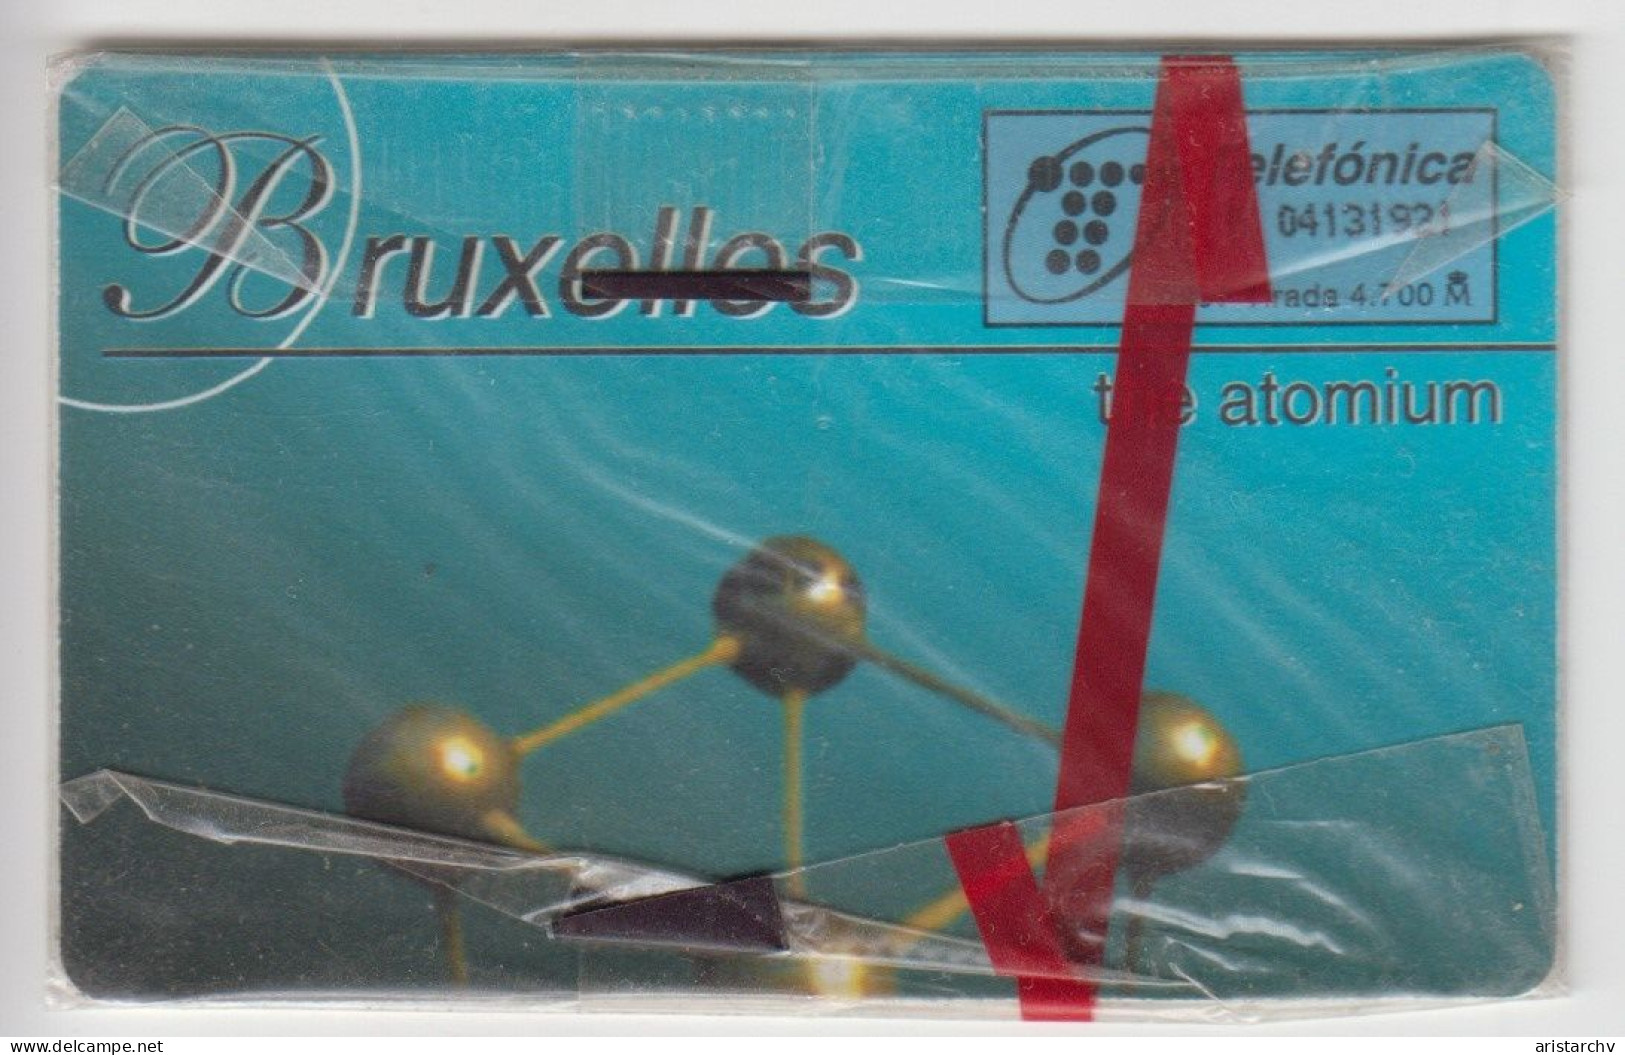 SPAIN 1997 CARD COLLECT '98 THESSALONIKI GREECE BRUXELLES ATOMIUM MINT CARD IN BLISTER - Privatausgaben